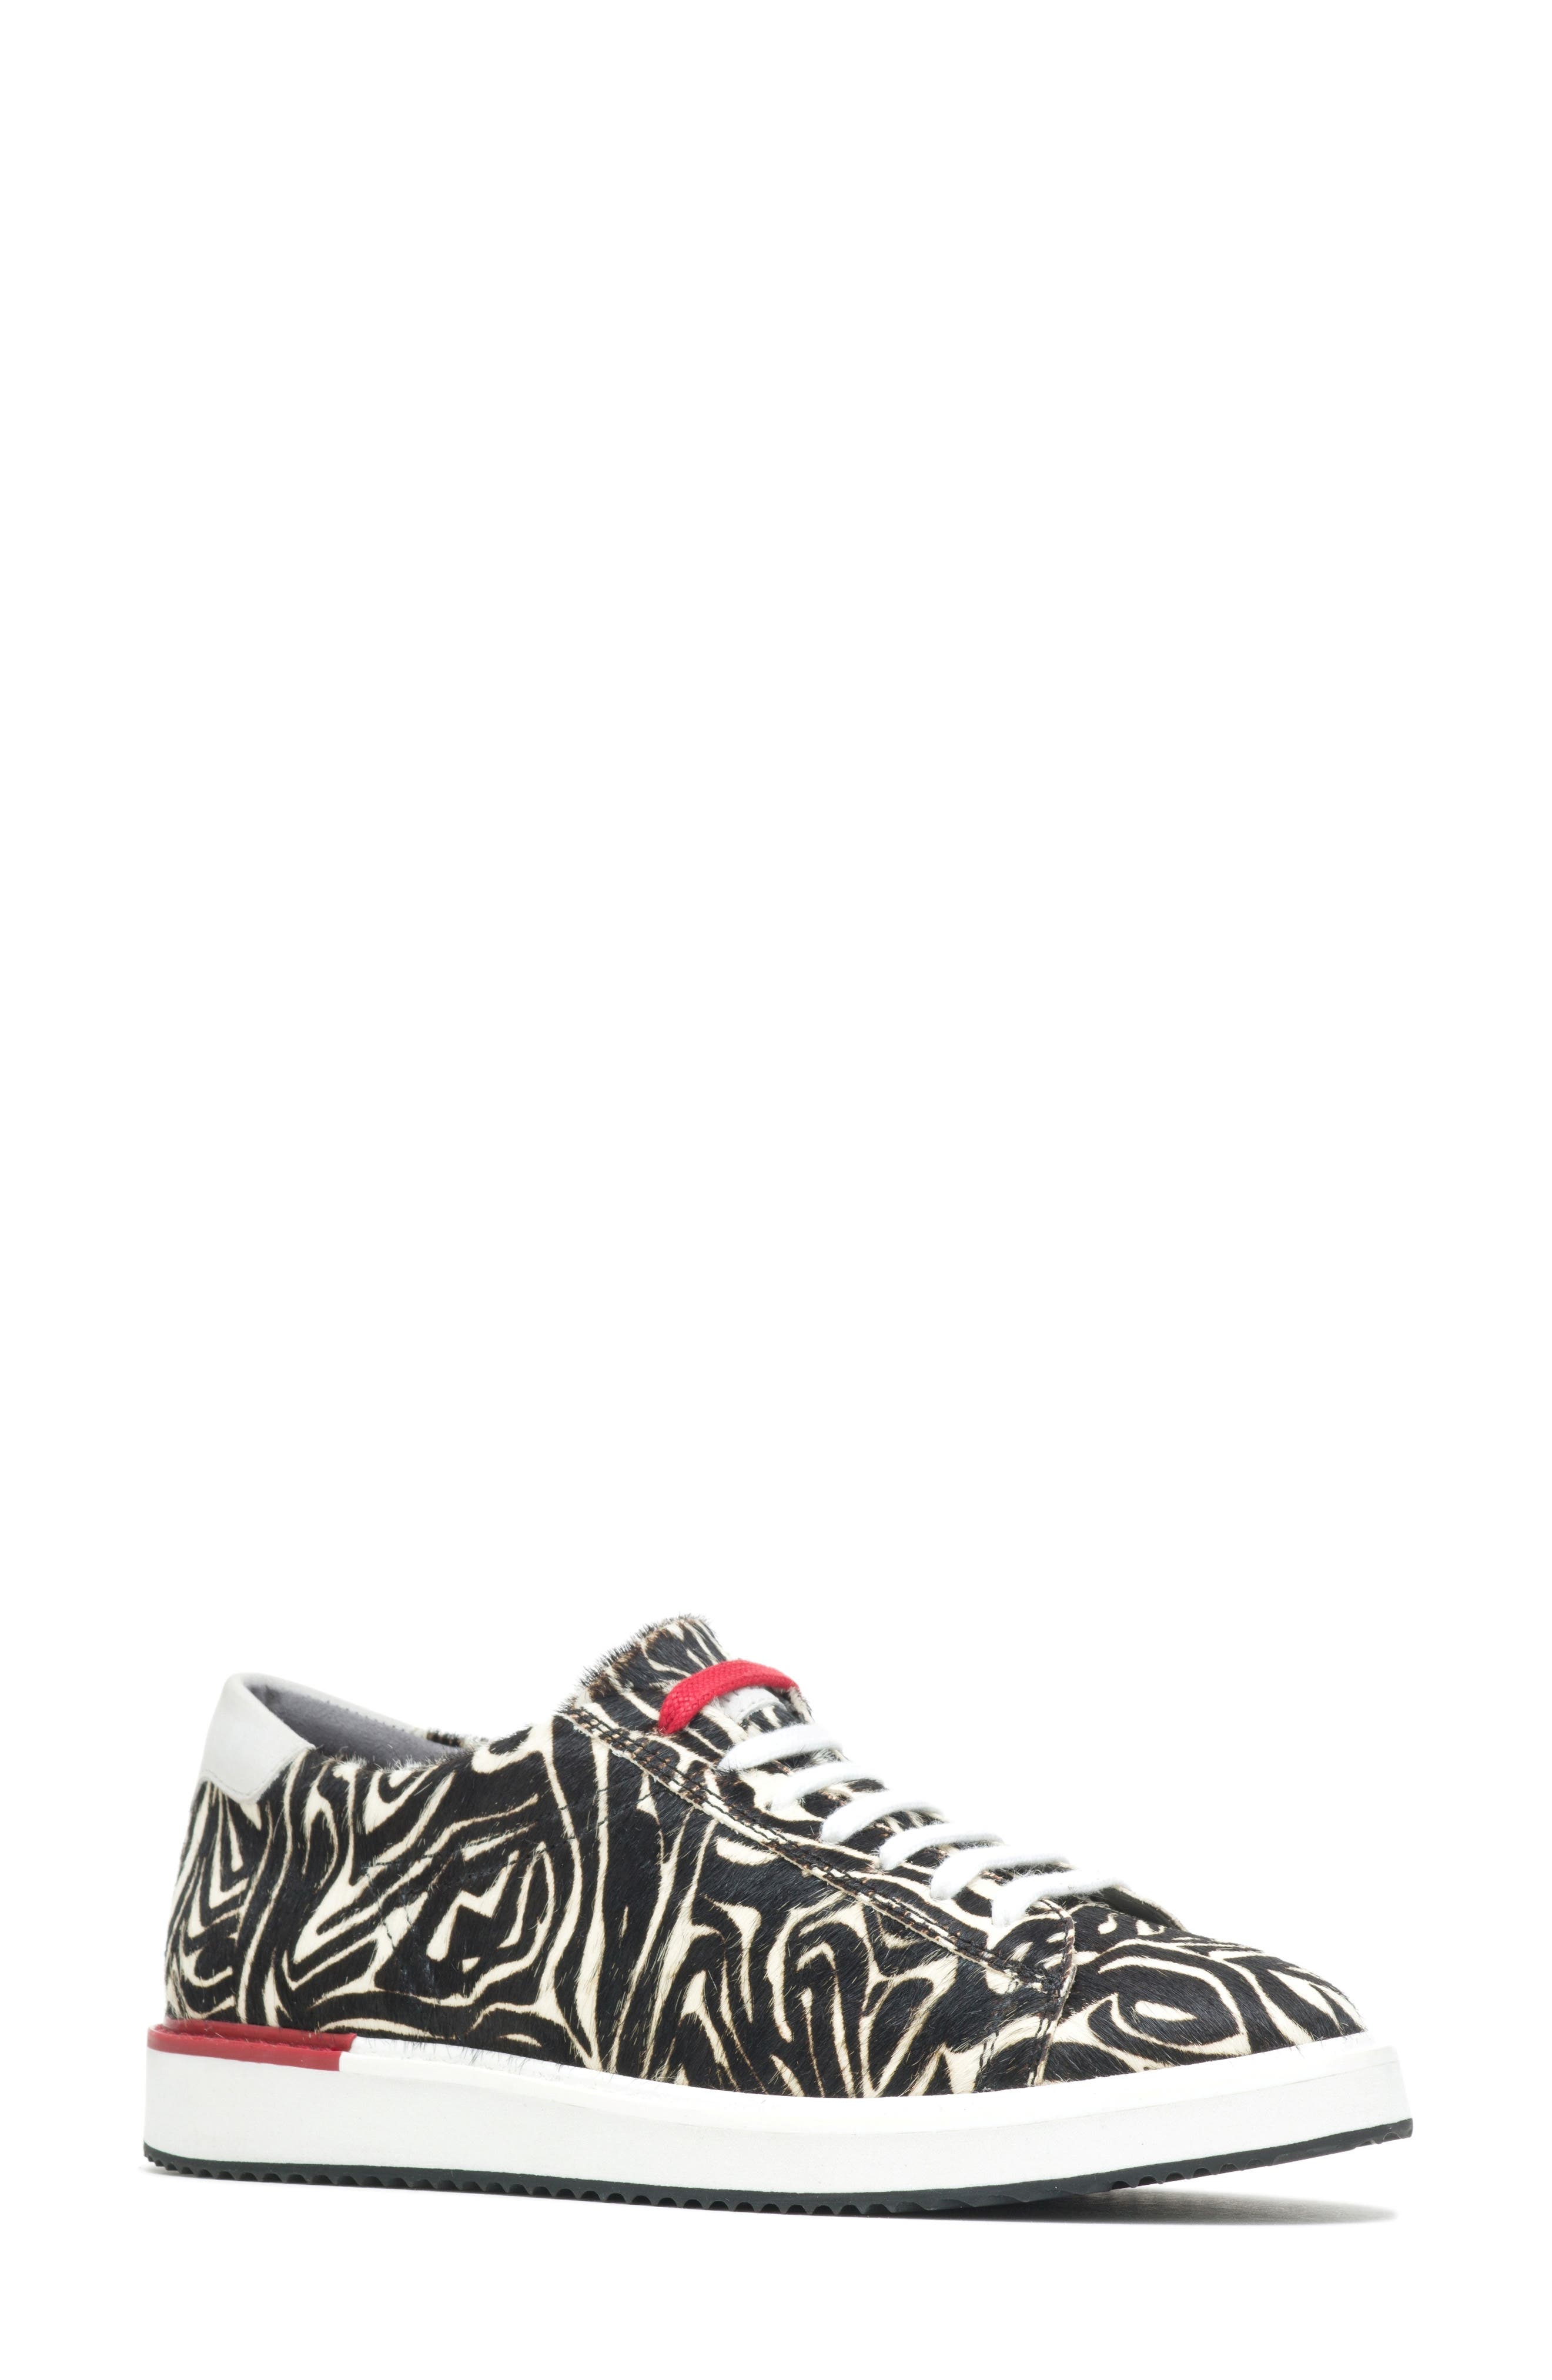 hush puppies leopard print shoes